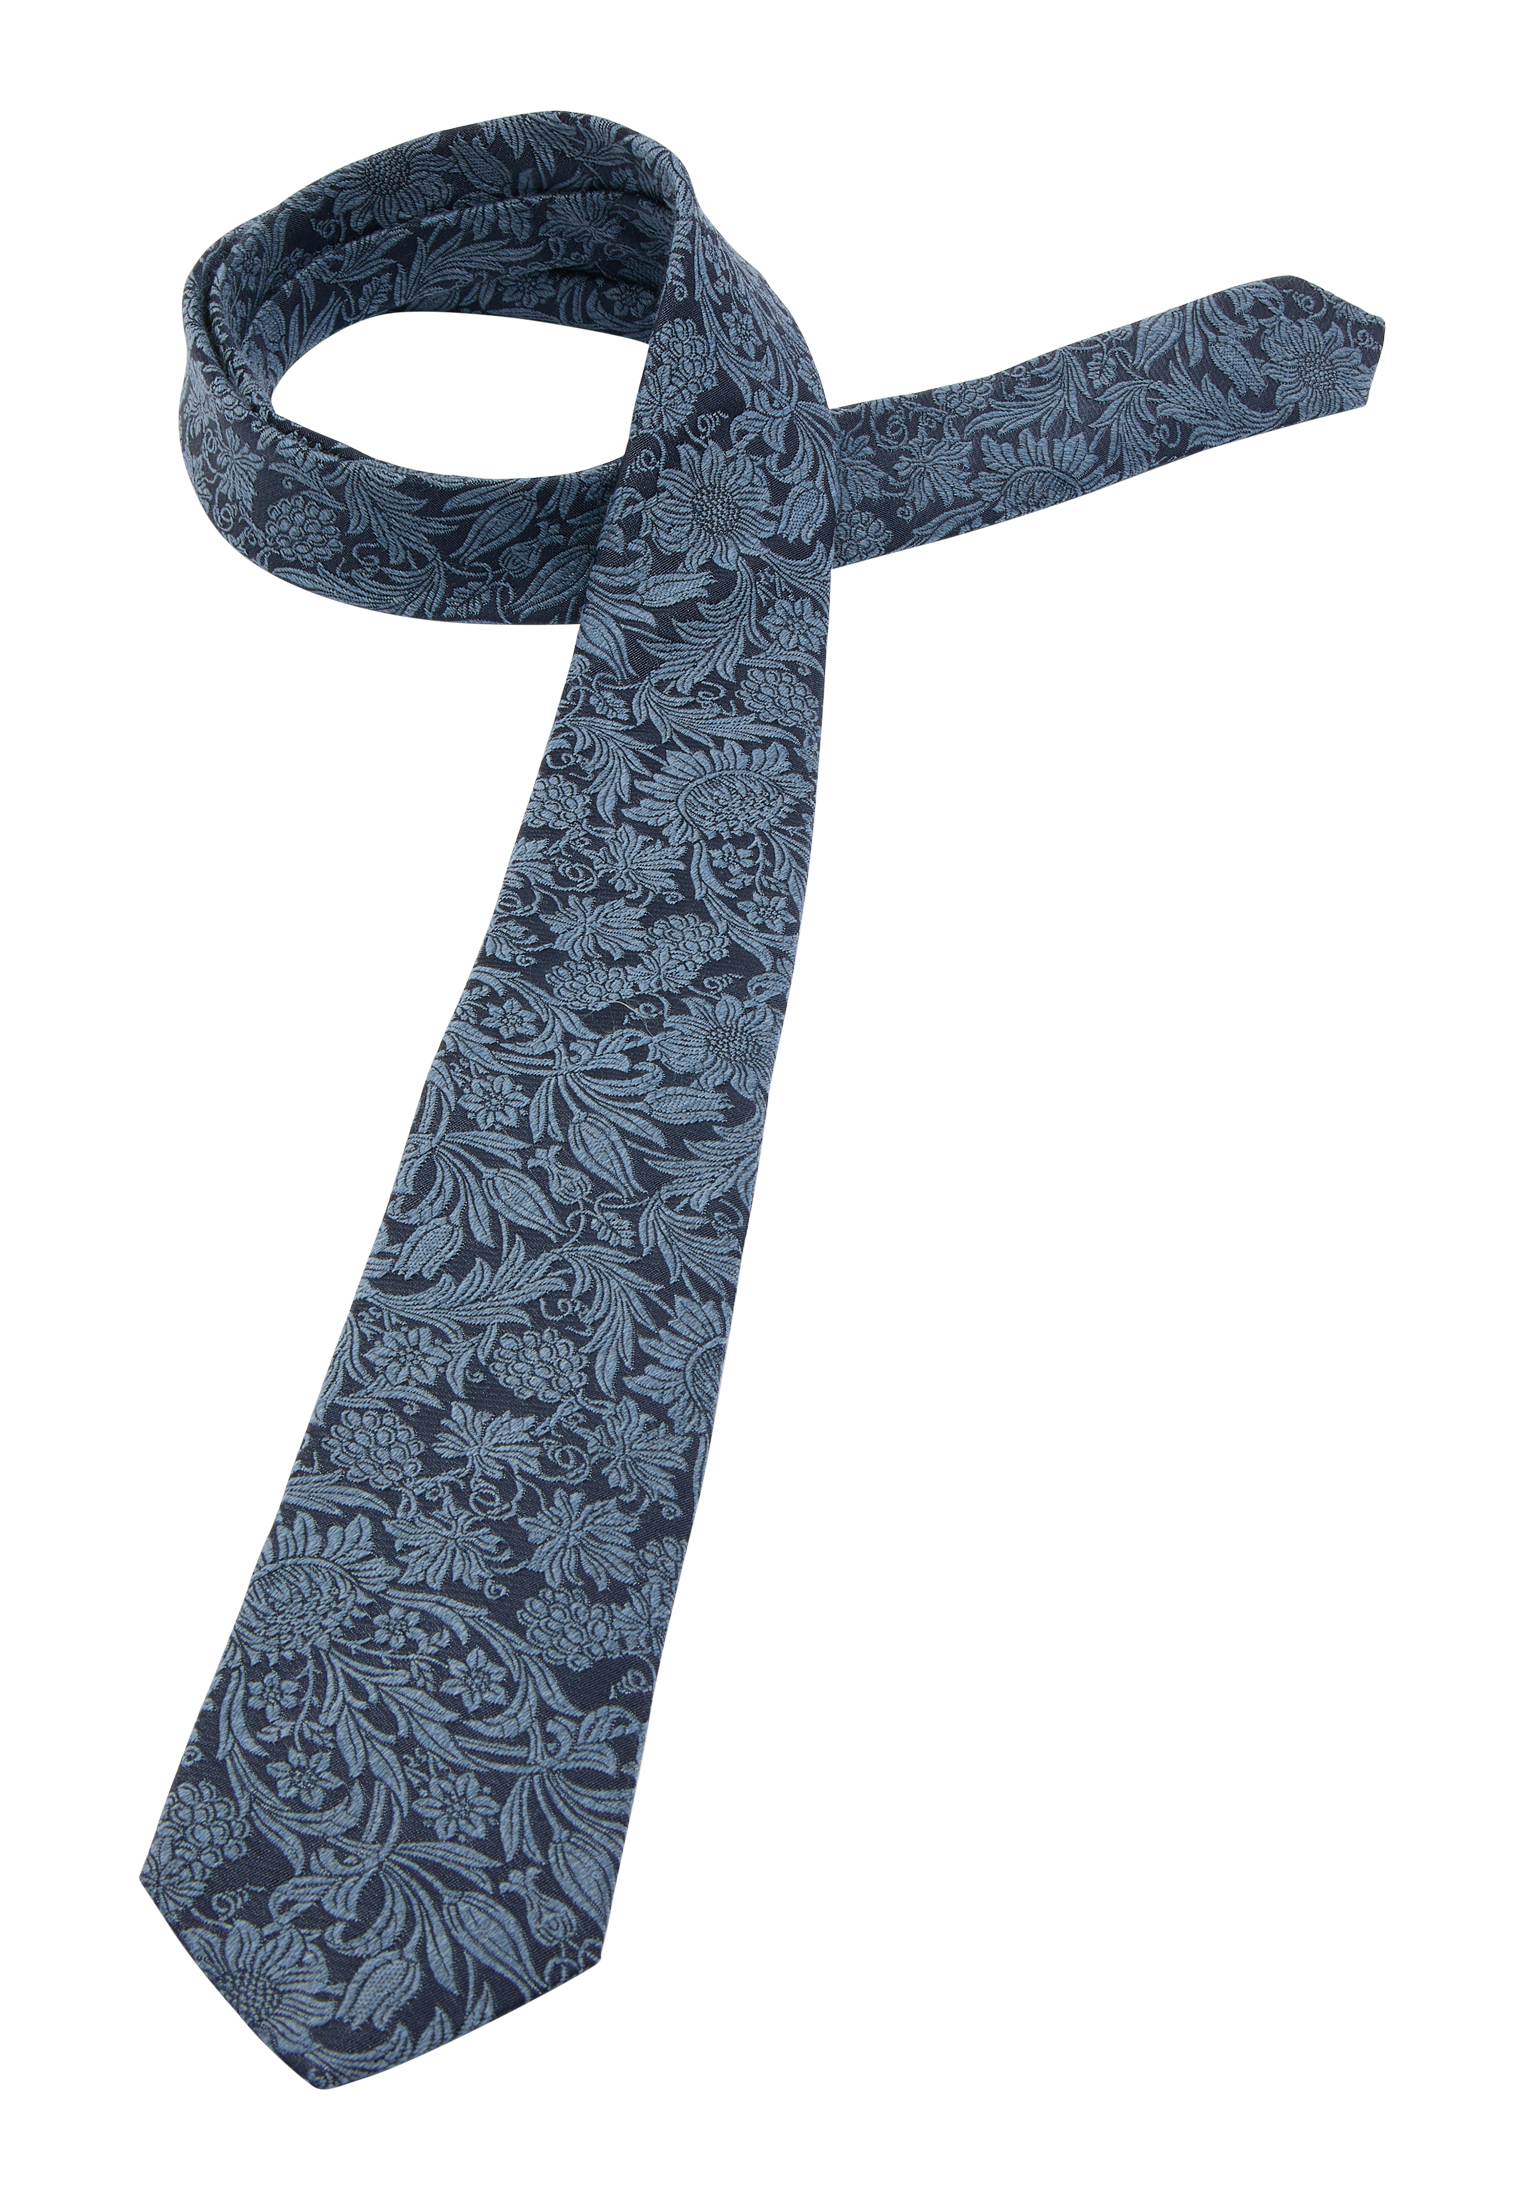 Tie in | | dark blue blue 1AC01901-01-81-142 142 patterned | dark